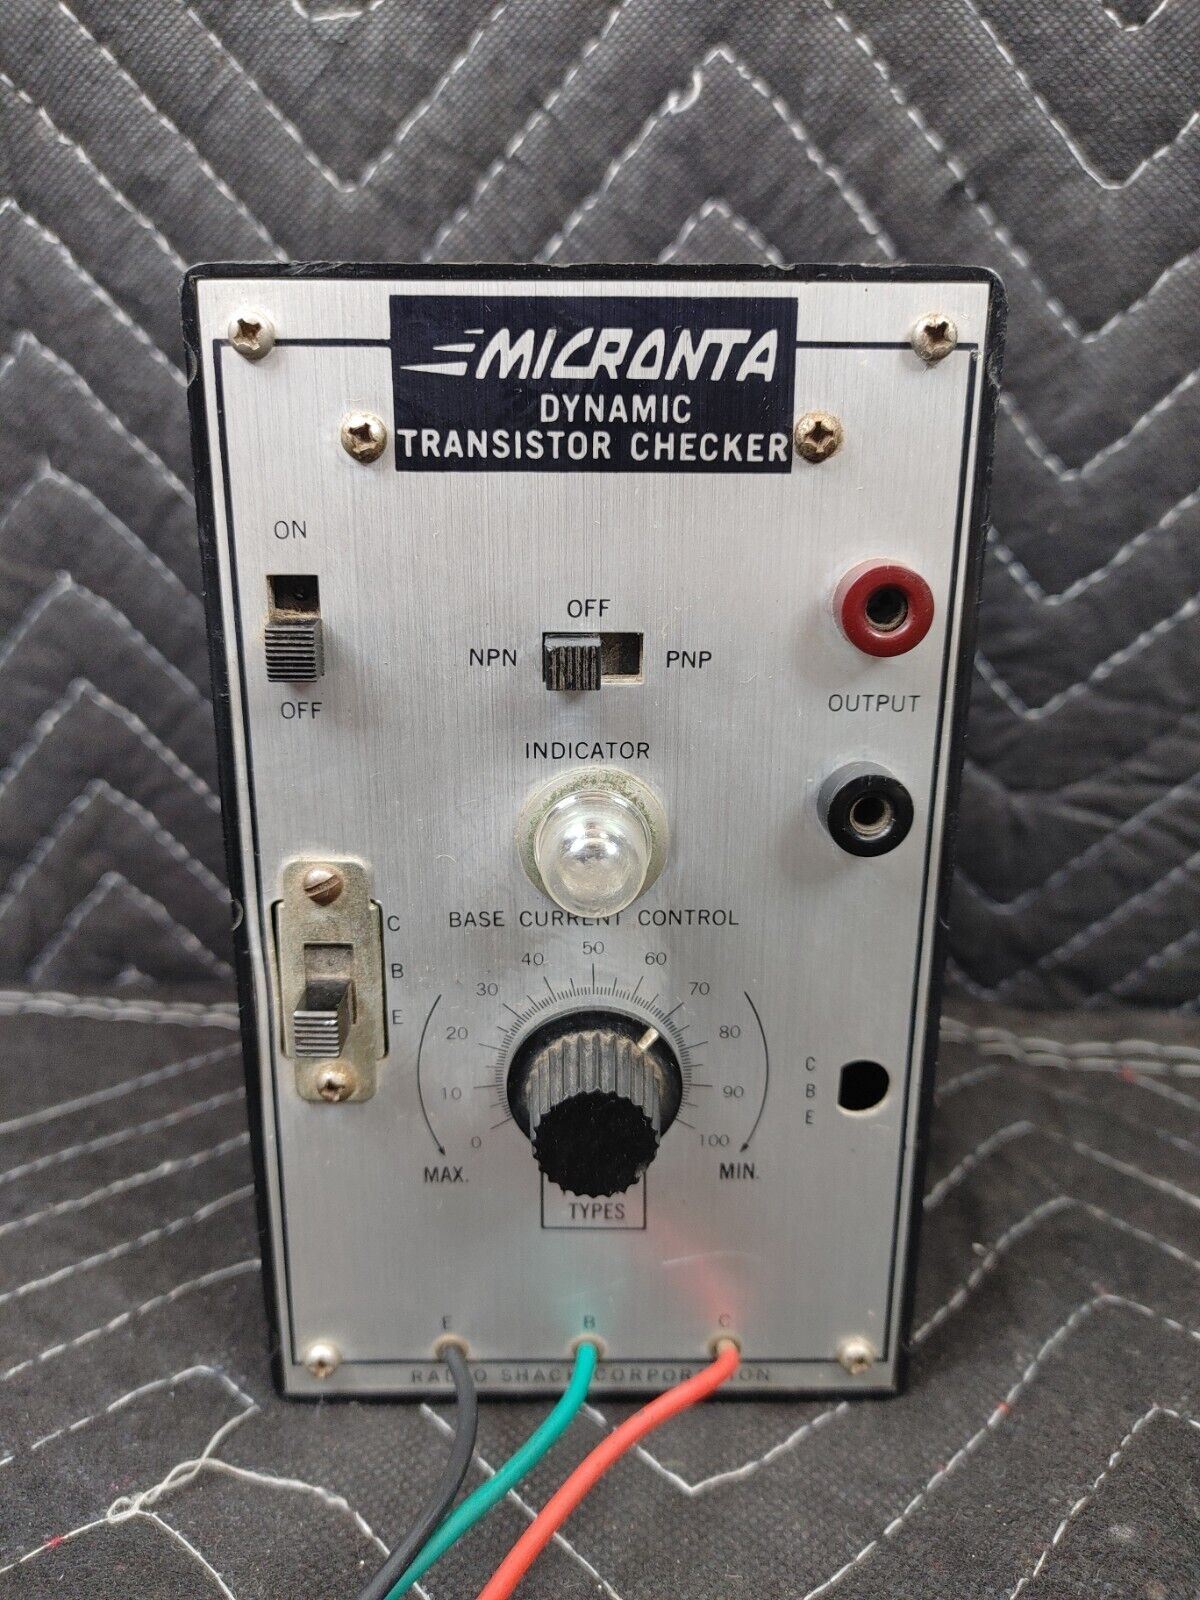 Radio Shack Micronta Dynamic Transistor checker